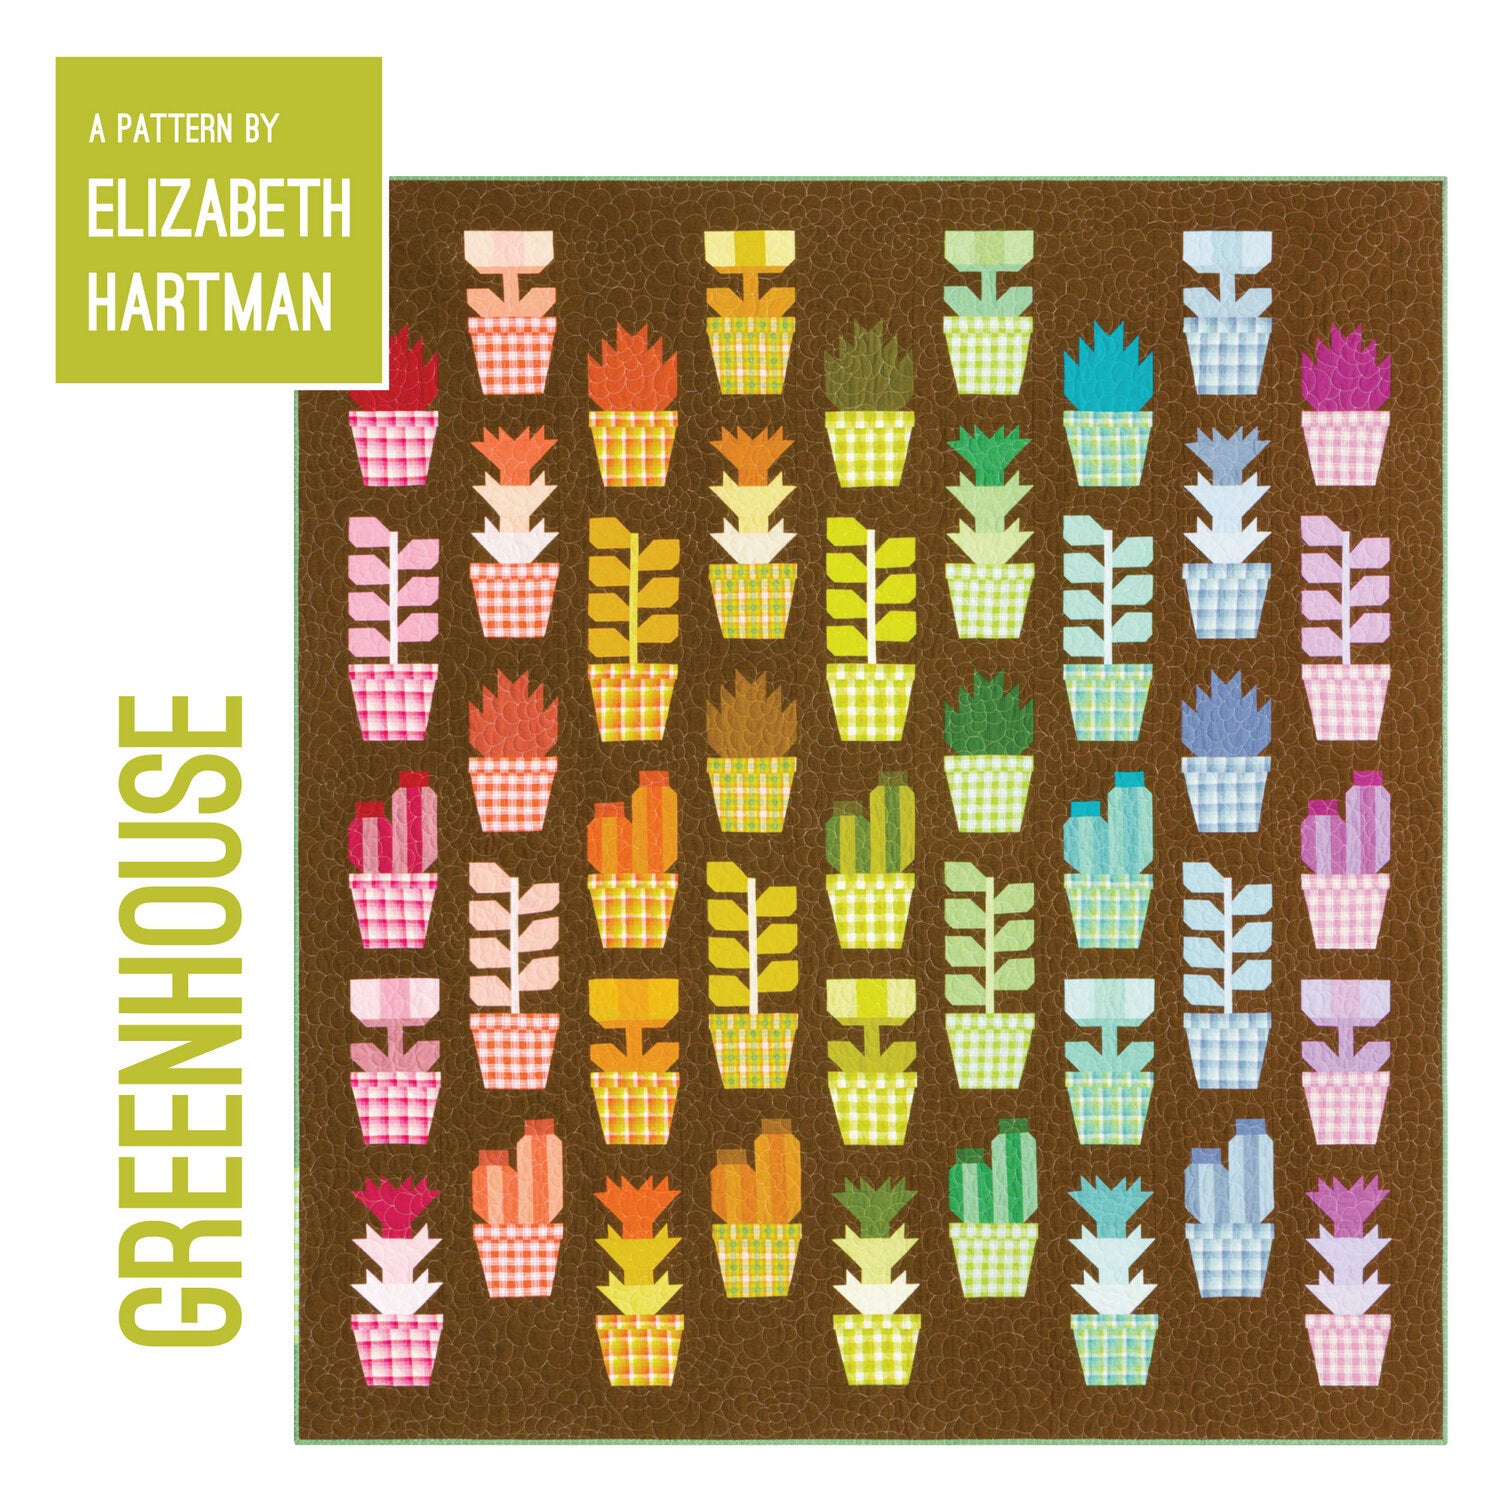 Greenhouse Quilt Kit - Elizabeth Hartman